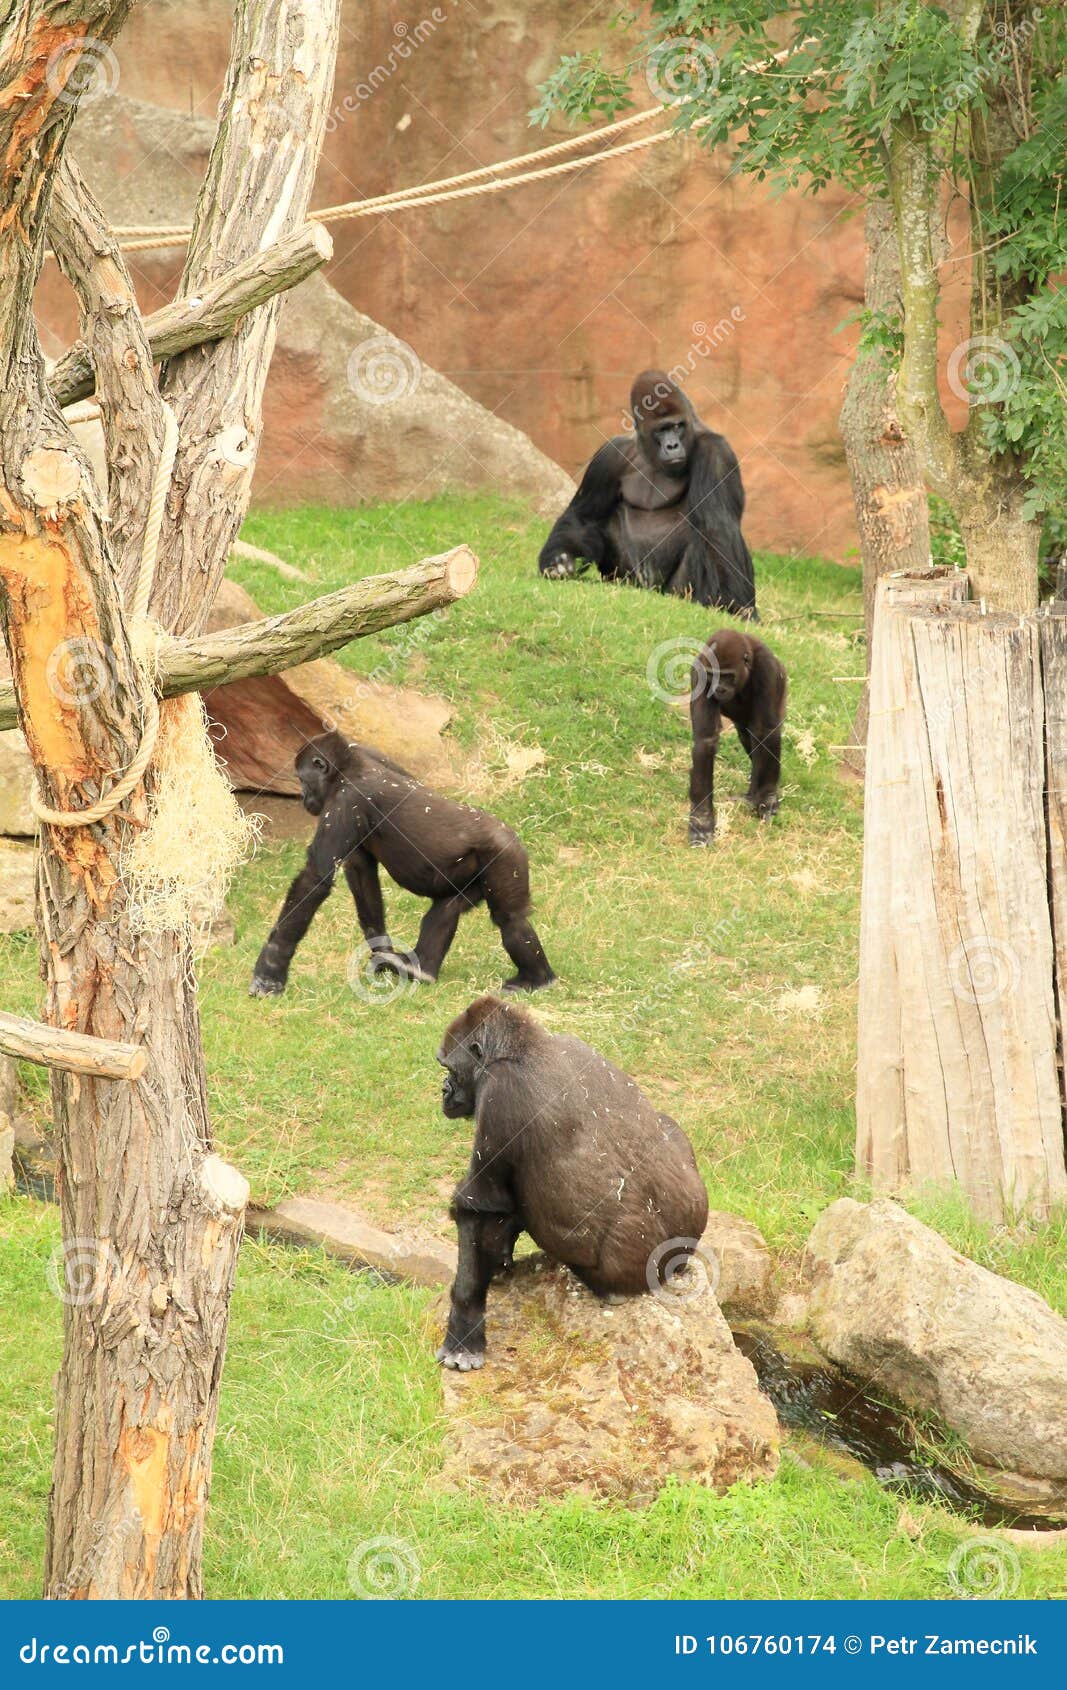 familiy of gorillas with cub